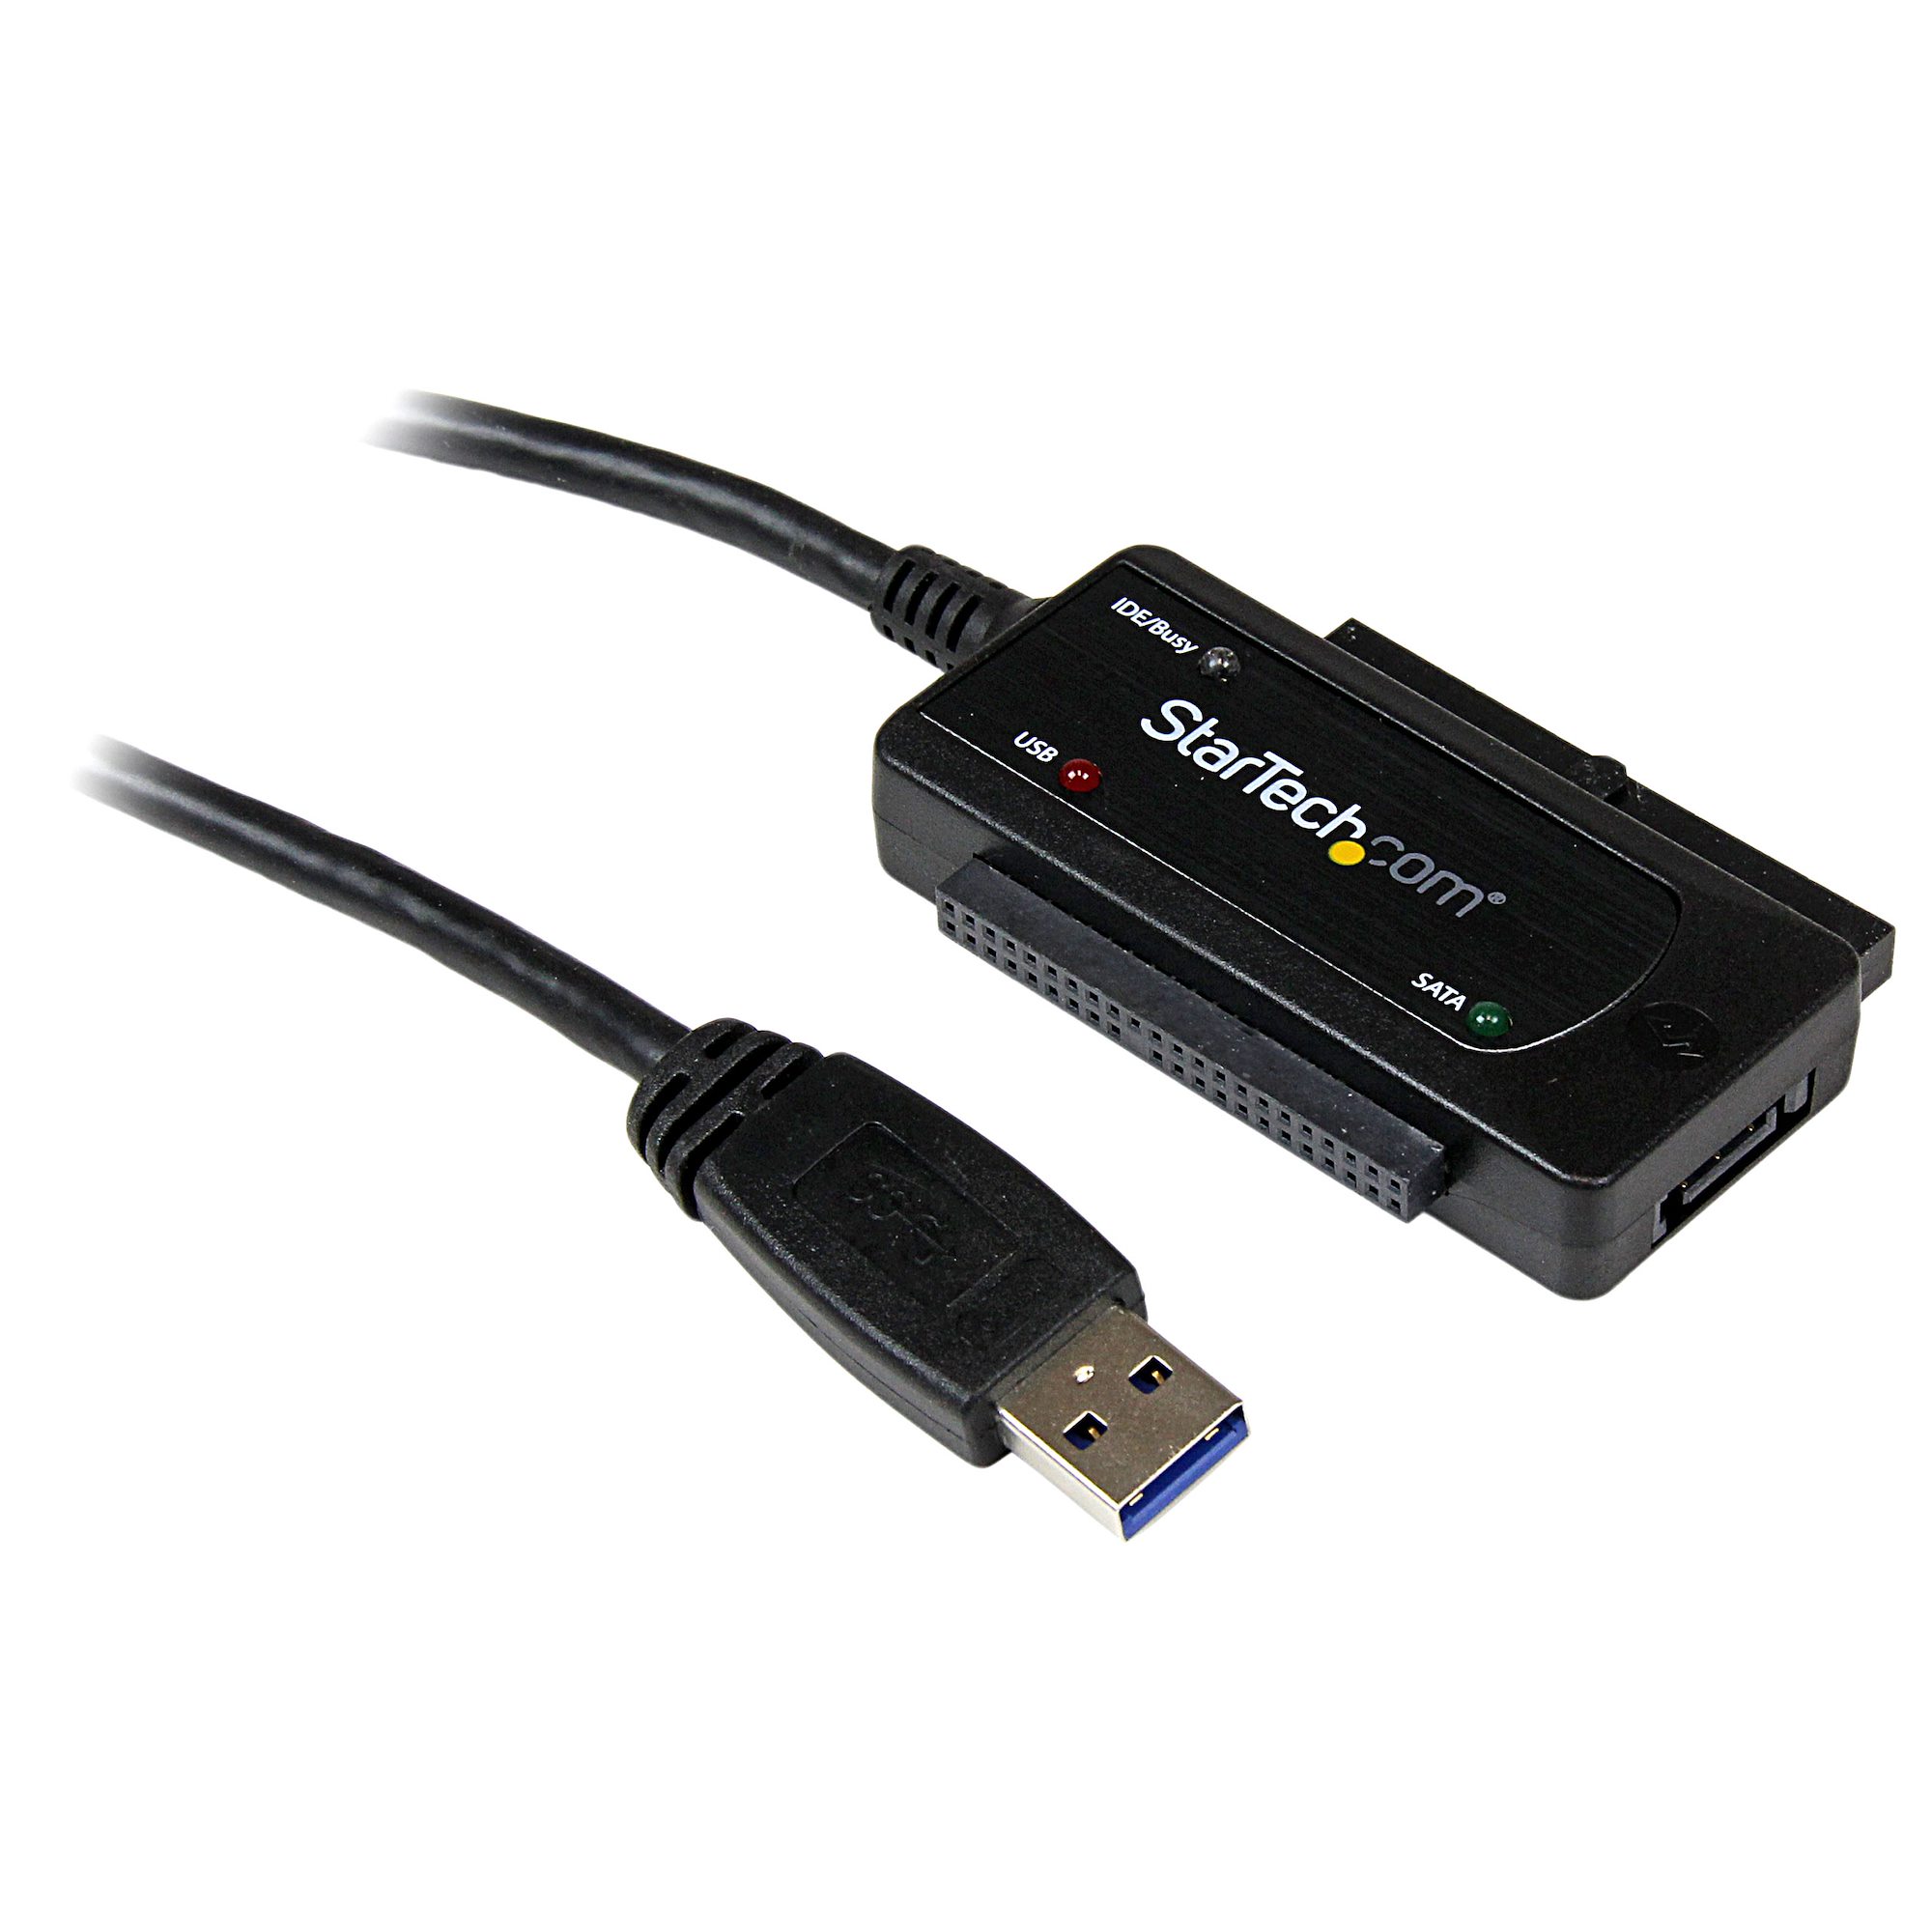 SATA PATA IDE Hard Drive Data Transfer AC Adapter Converter Cable USB Port PC 